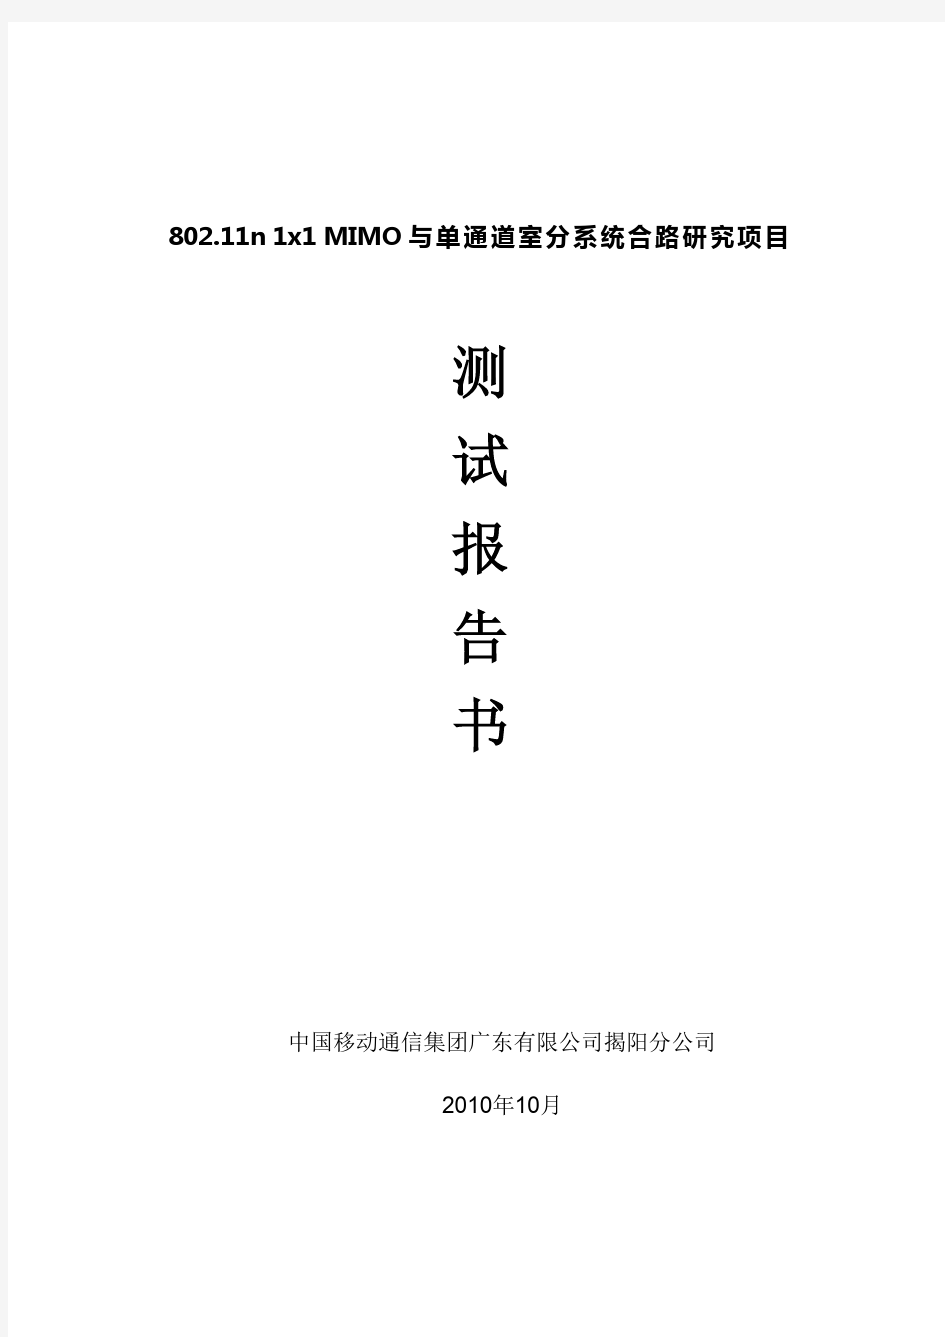 802.11n 1x1 MIMO与单通道室分系统合路研究项目 测试报告书(1)